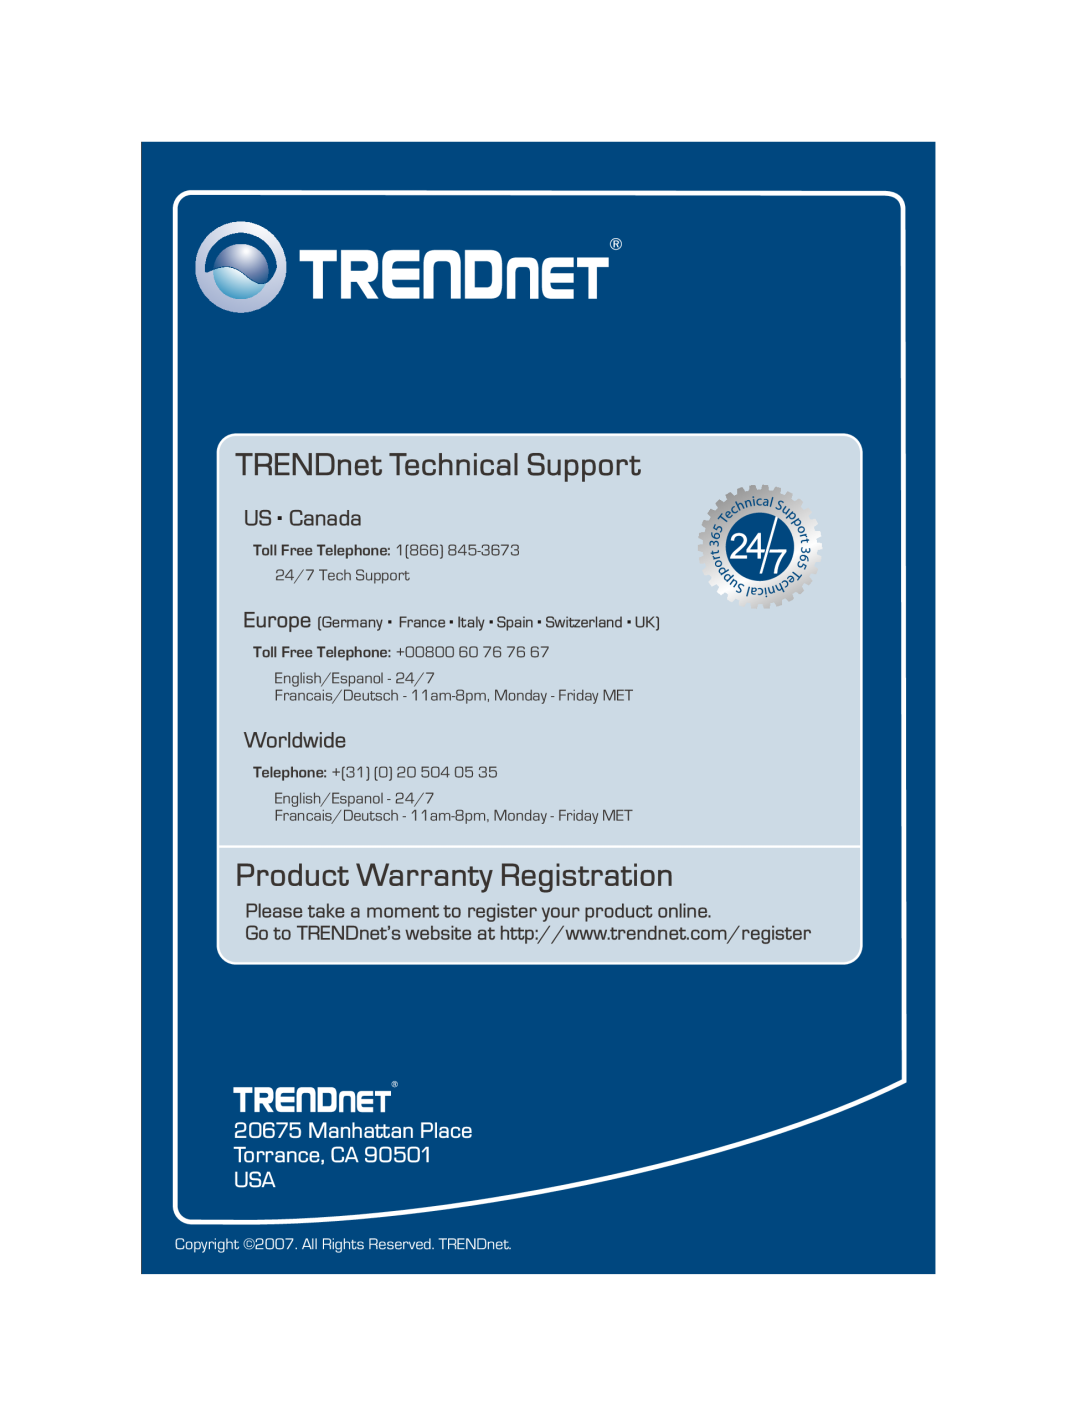 TRENDnet TV-IP212W Manhattan Place Torrance, CA USA, TRENDnet Technical Support, Product Warranty Registration, Worldwide 